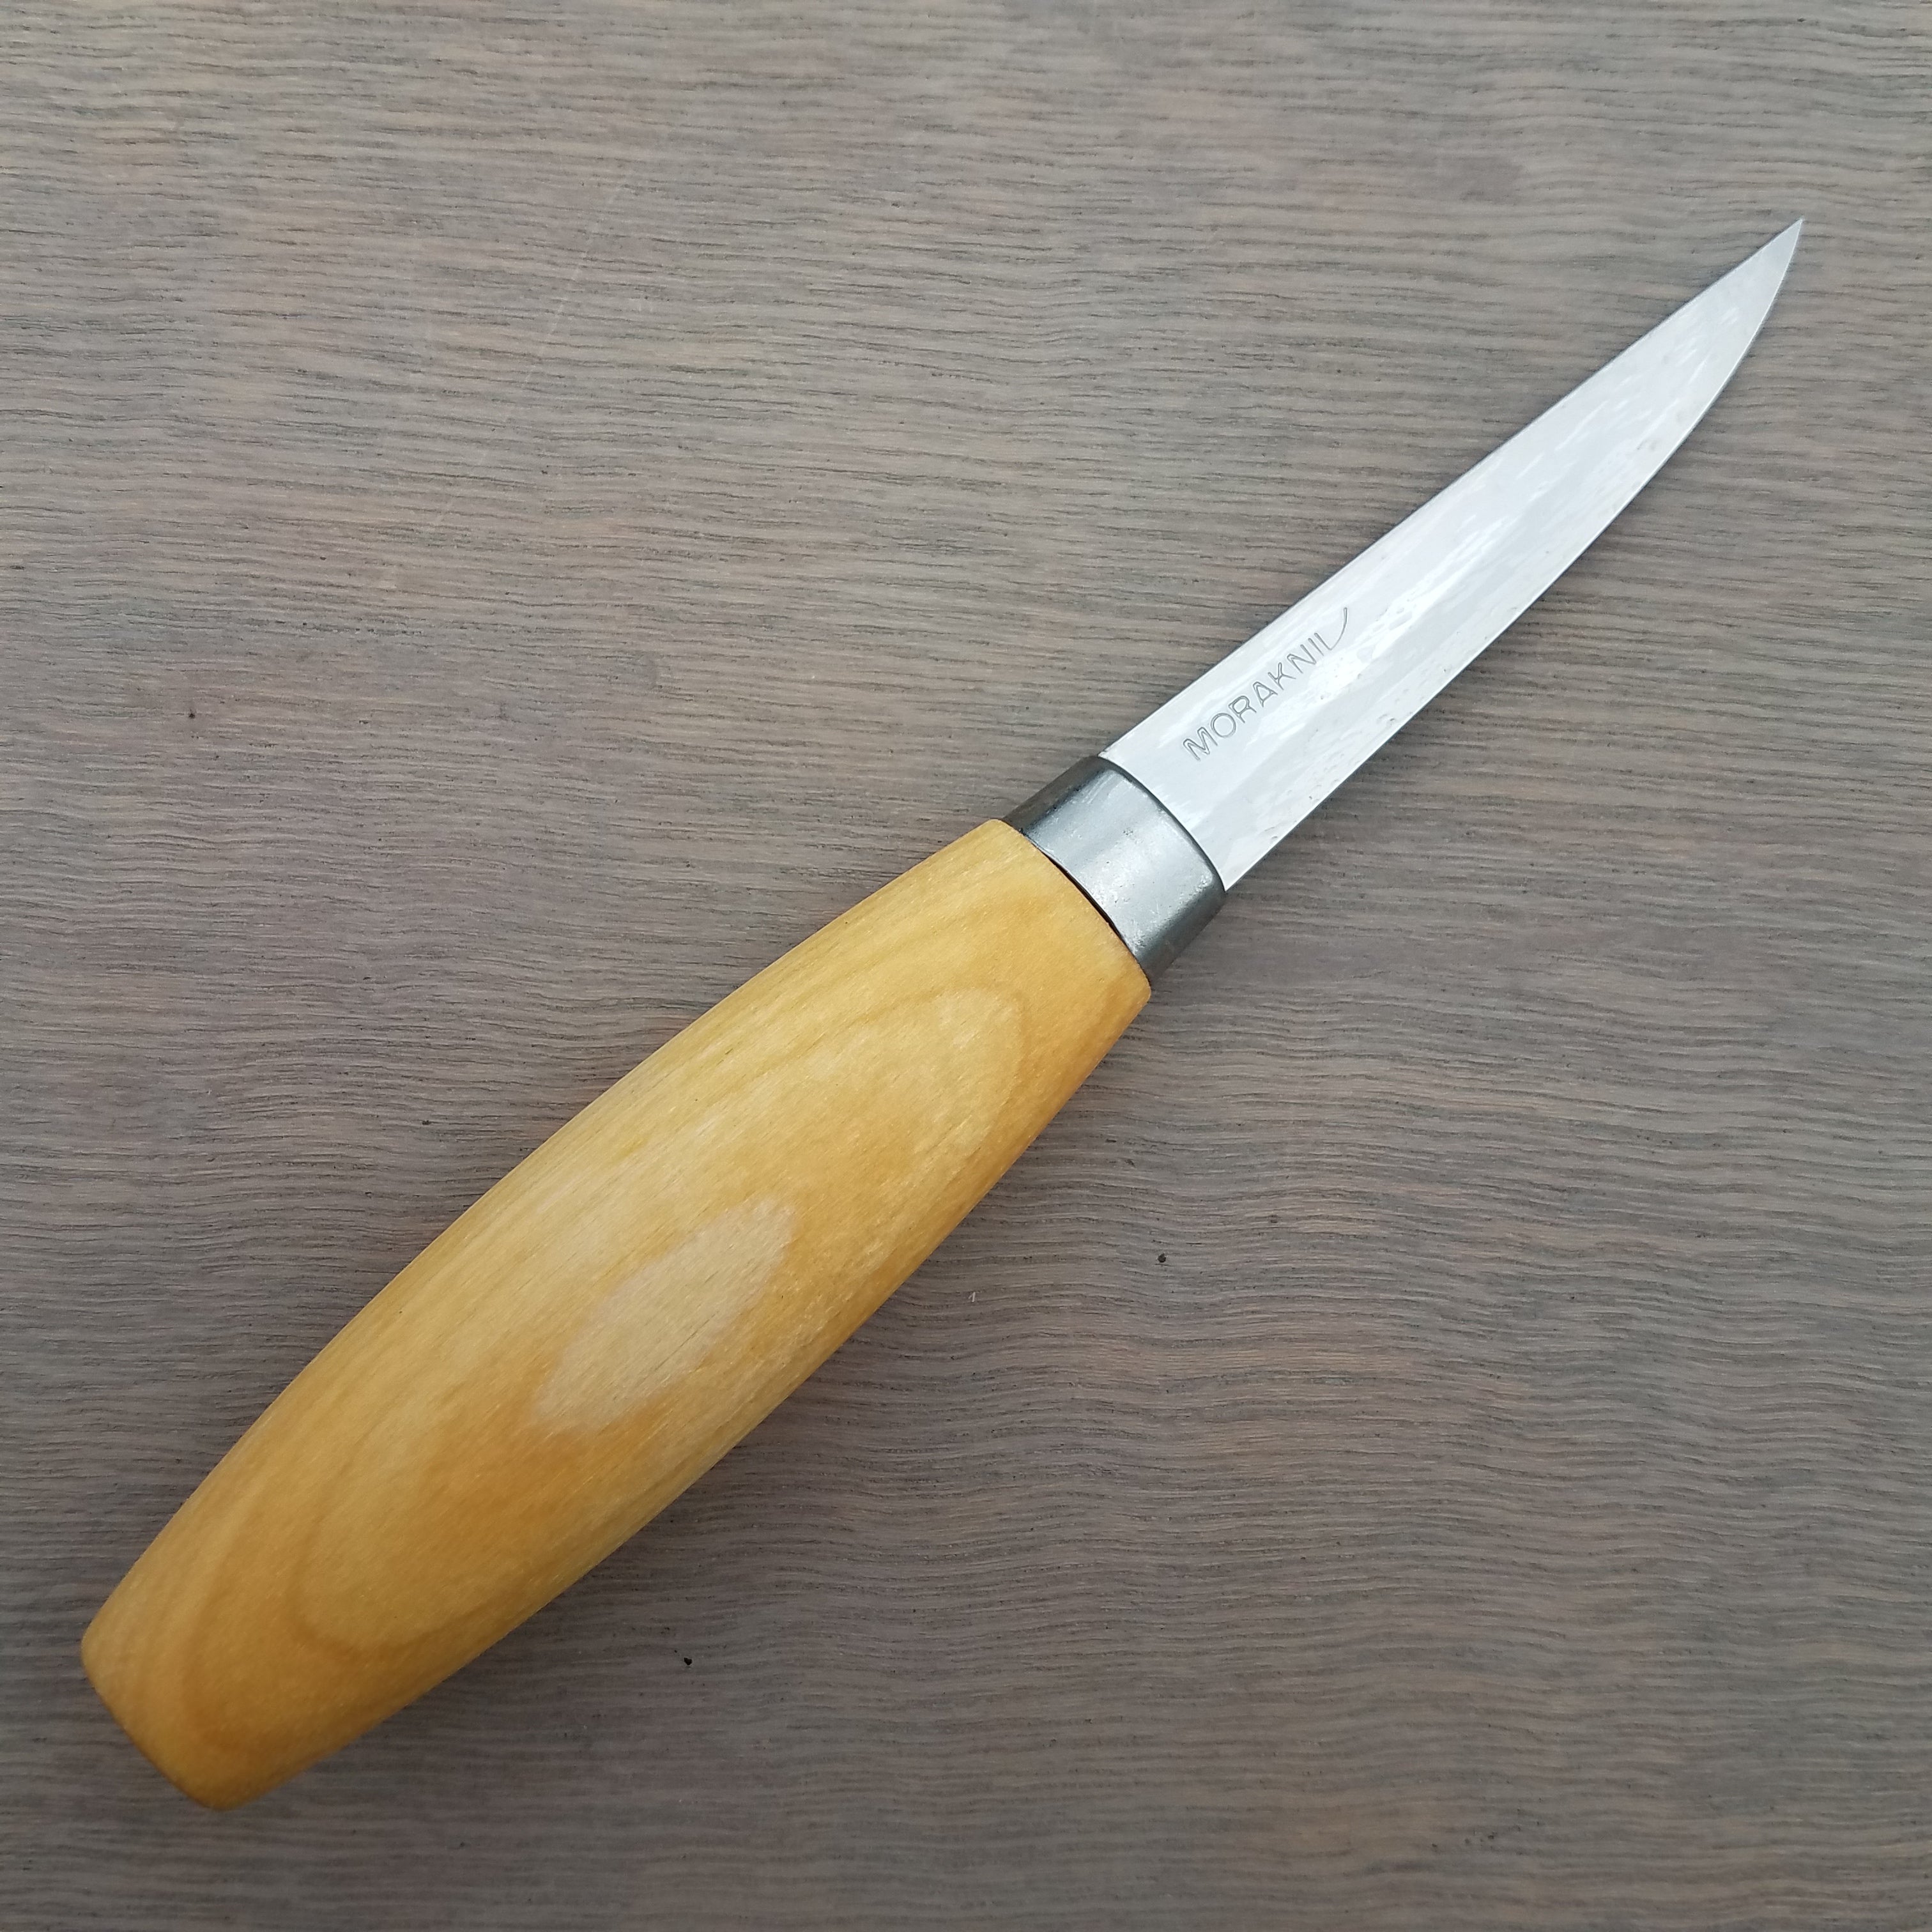 Morakniv Wood Carving 106 Knife